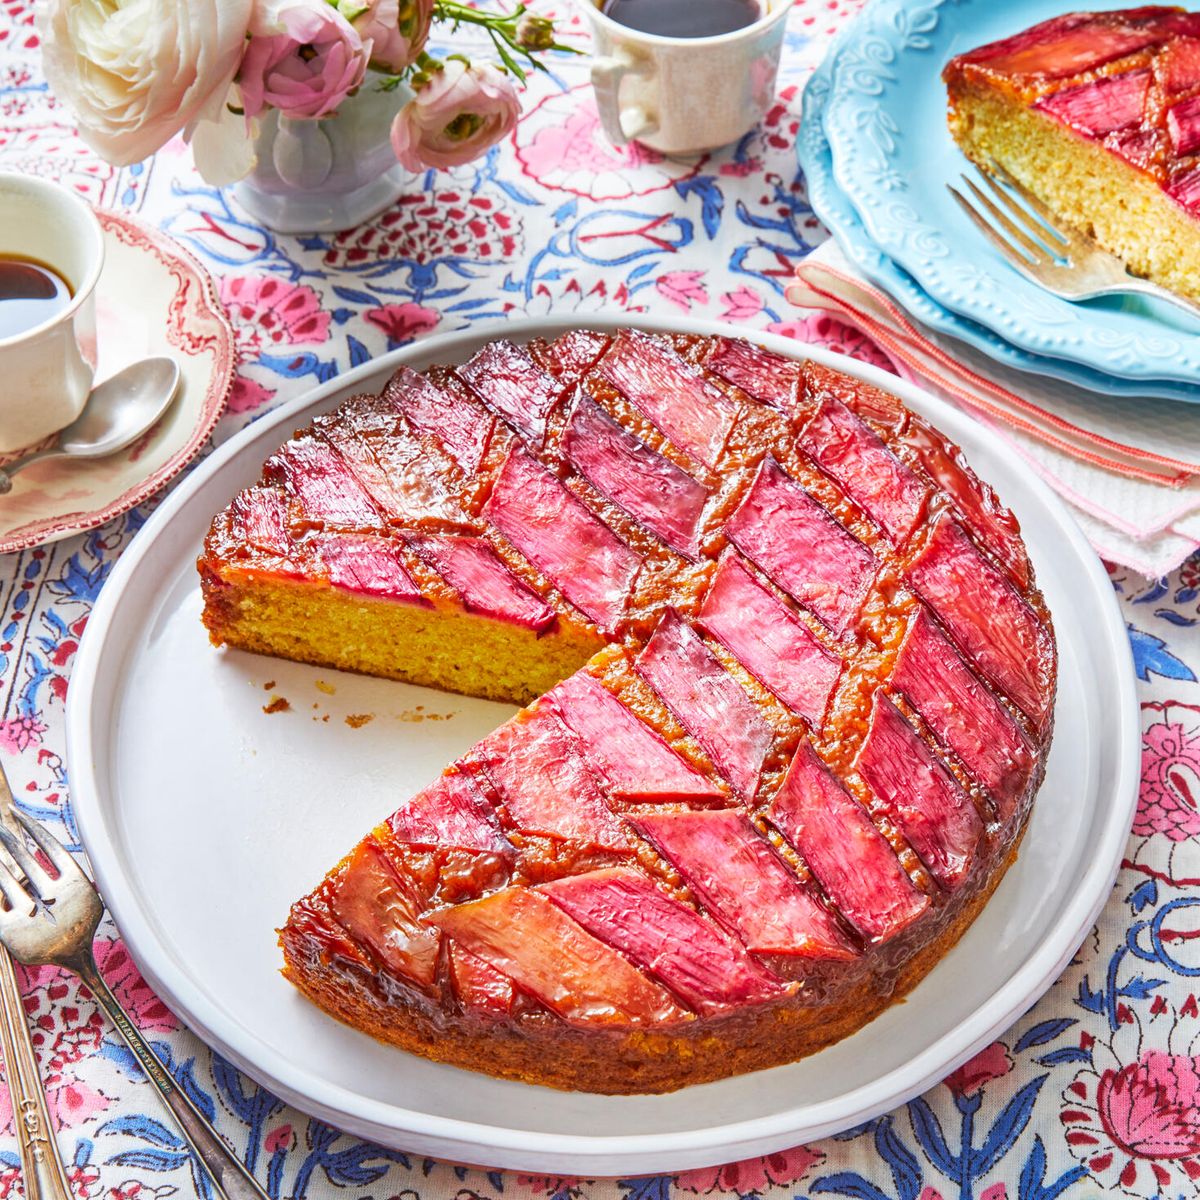 the pioneer woman's rhubarb upside down cake recipe